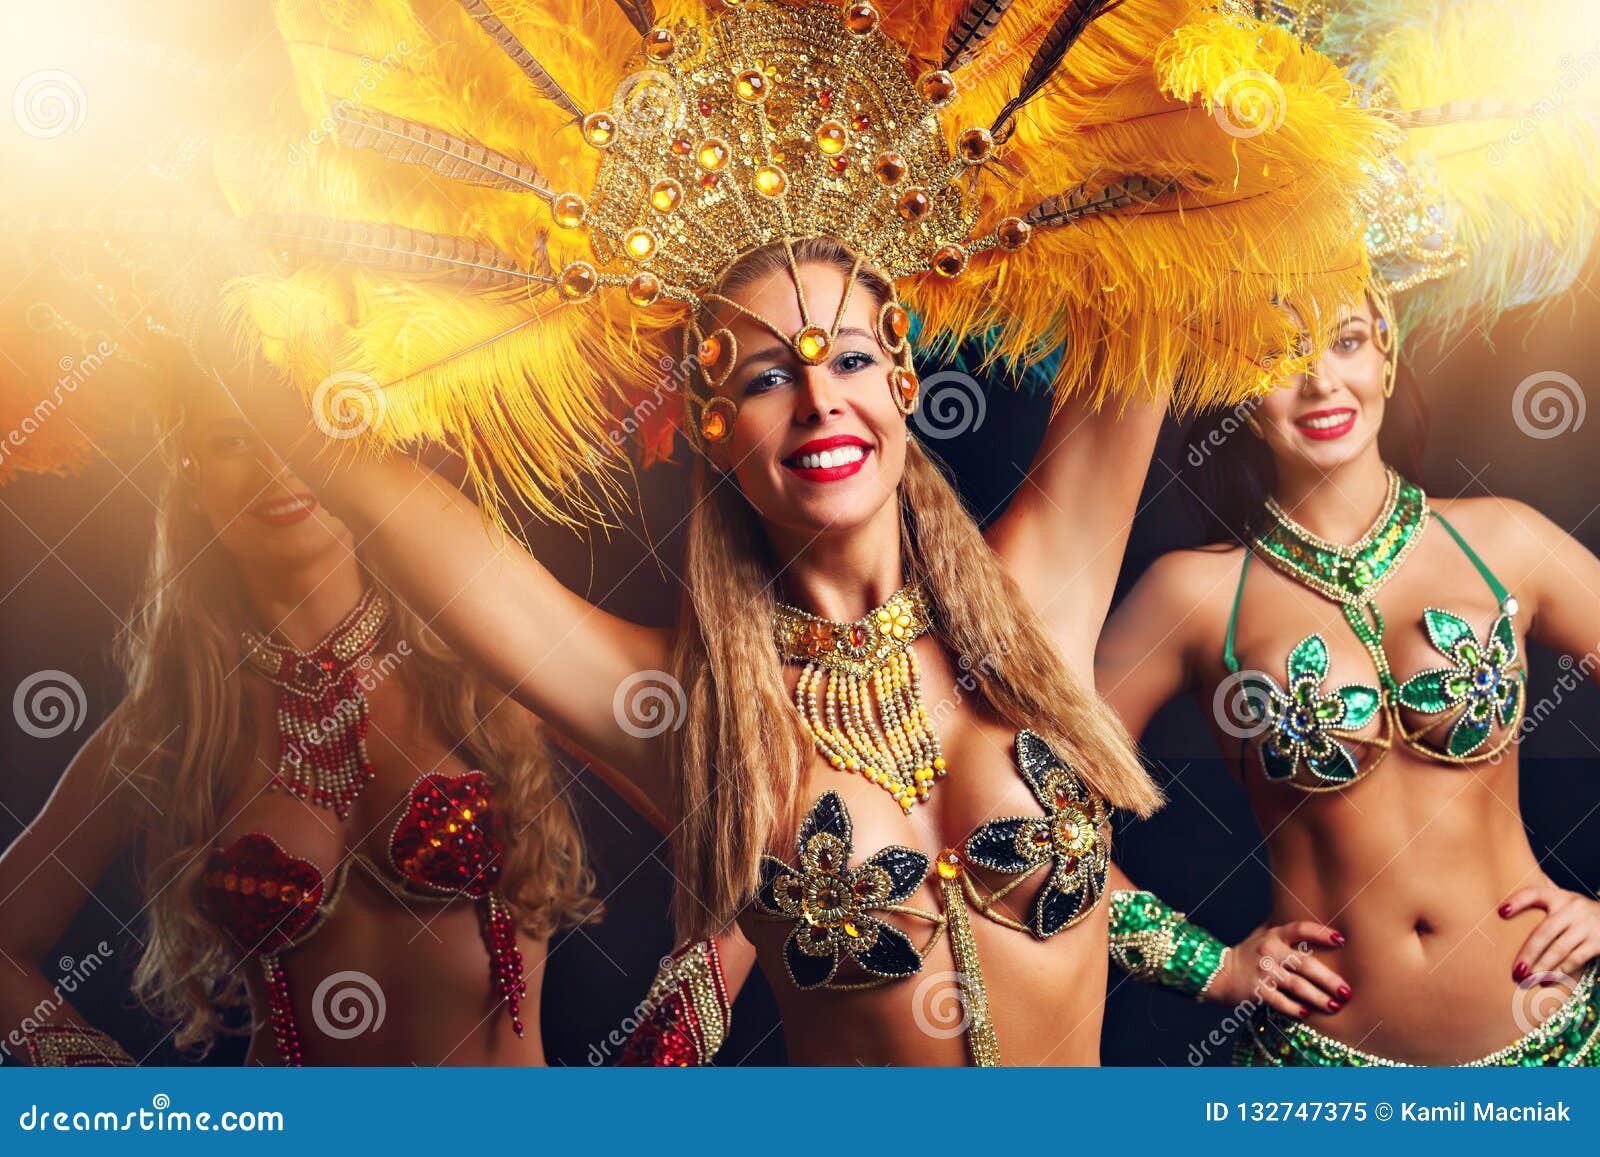 Brazilian Women Dancing Samba At Carnival Stock Image Image Of Female Party